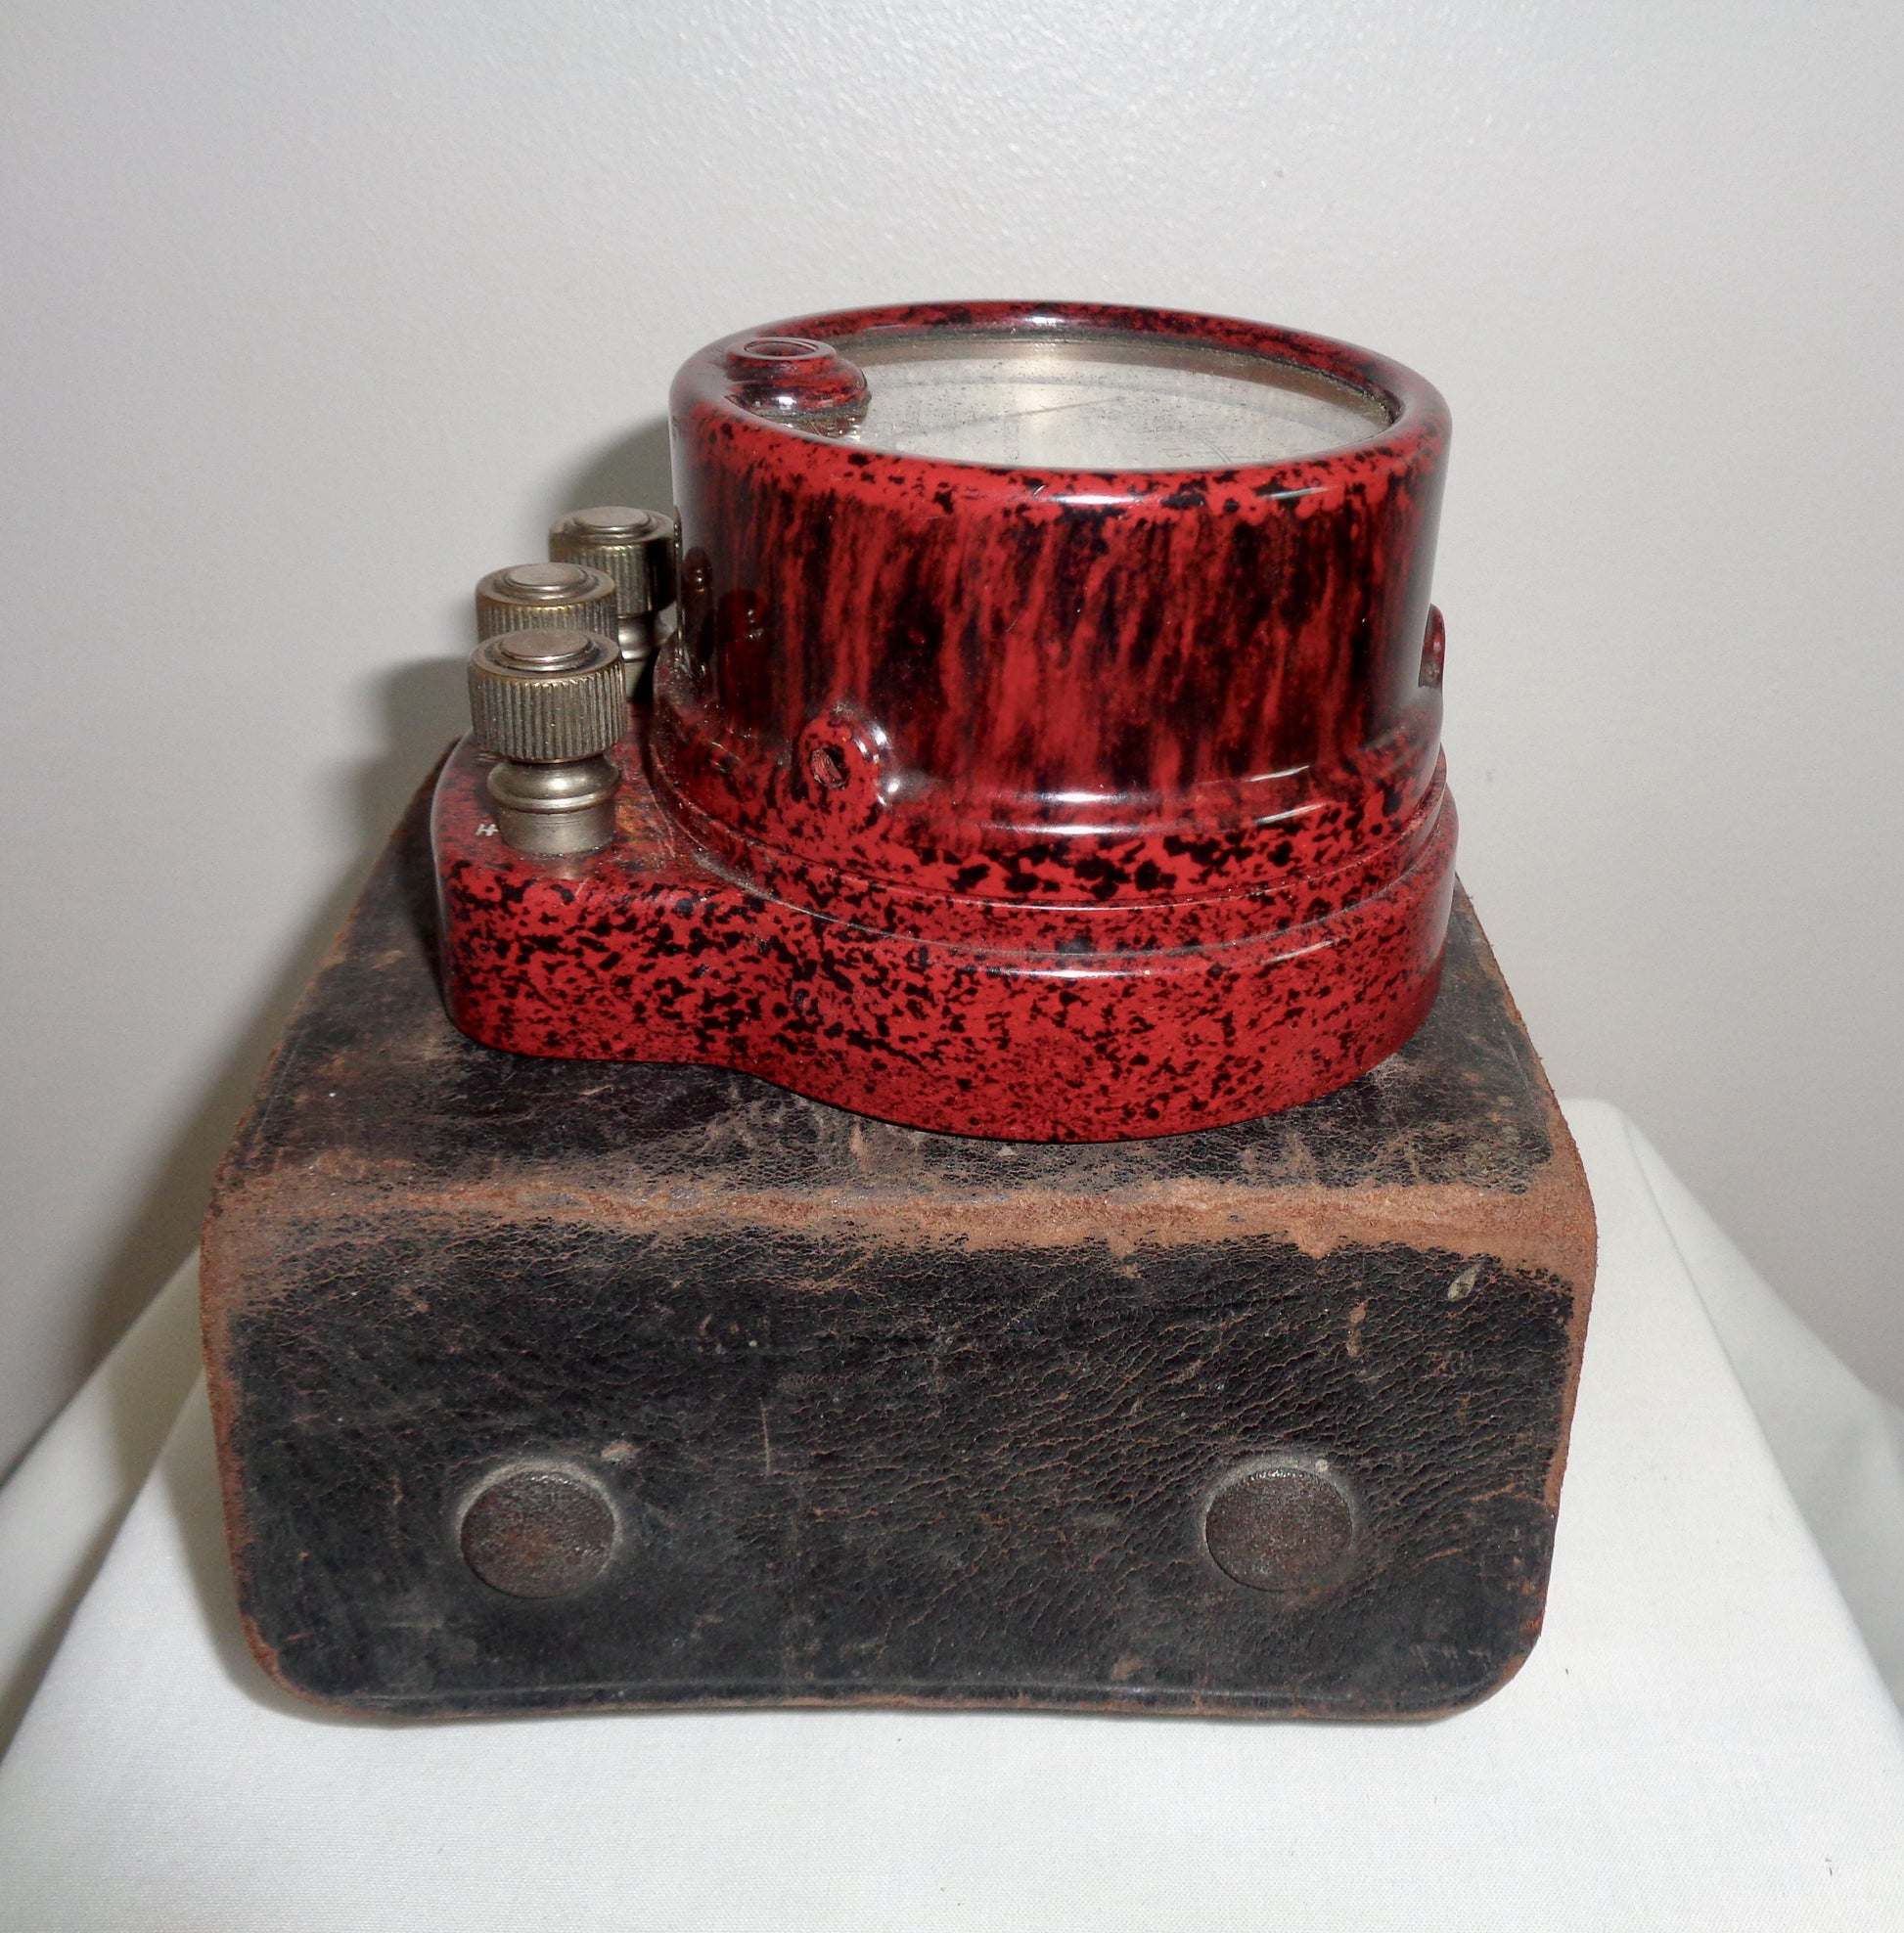 1920s Weston Electrical Instruments Red Bakelite Ammeter